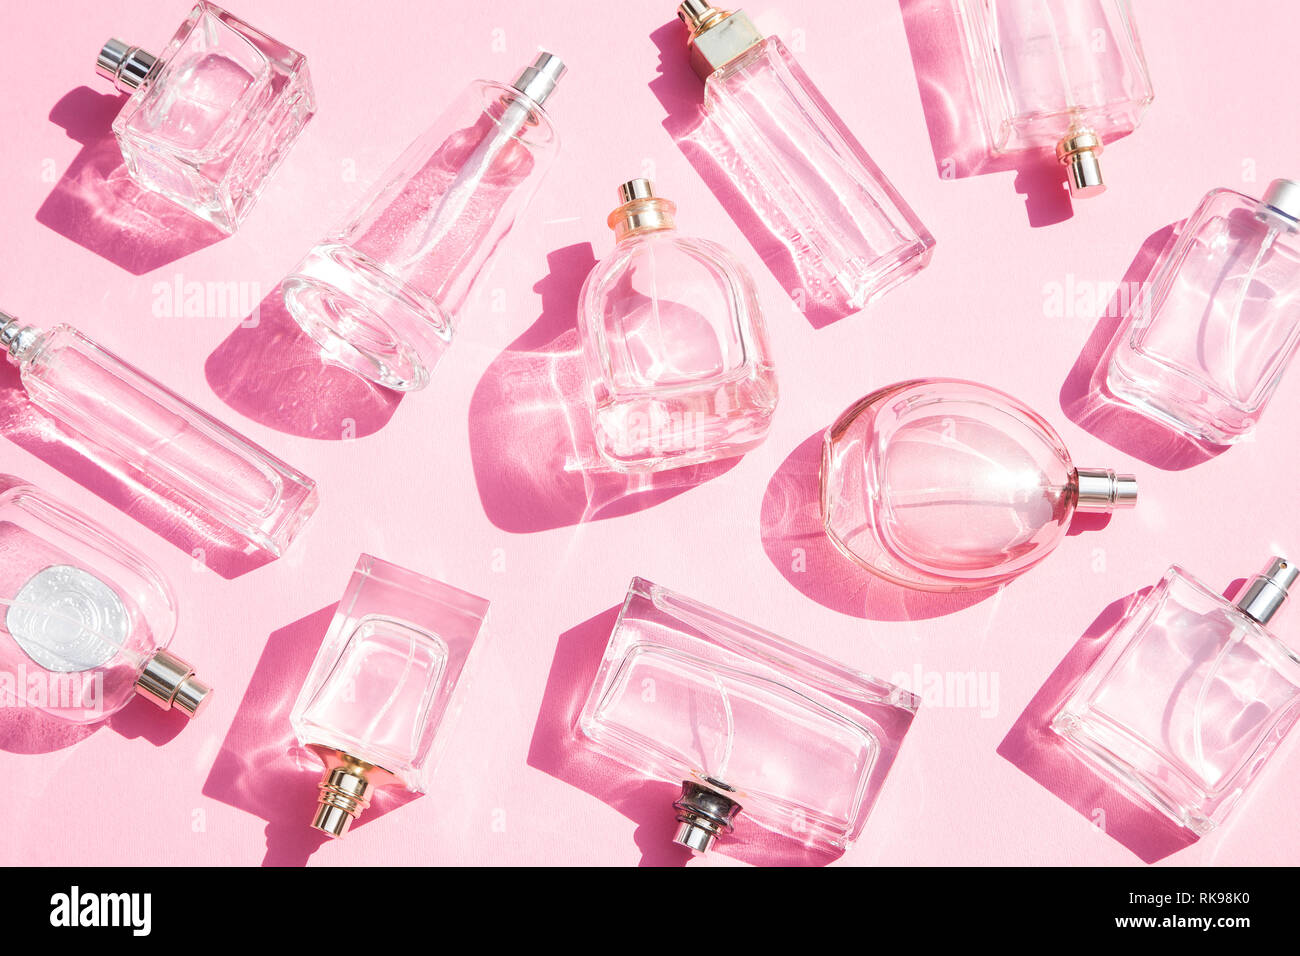 Frascos de perfume sobre fondo de color rosa Fotografía de stock - Alamy